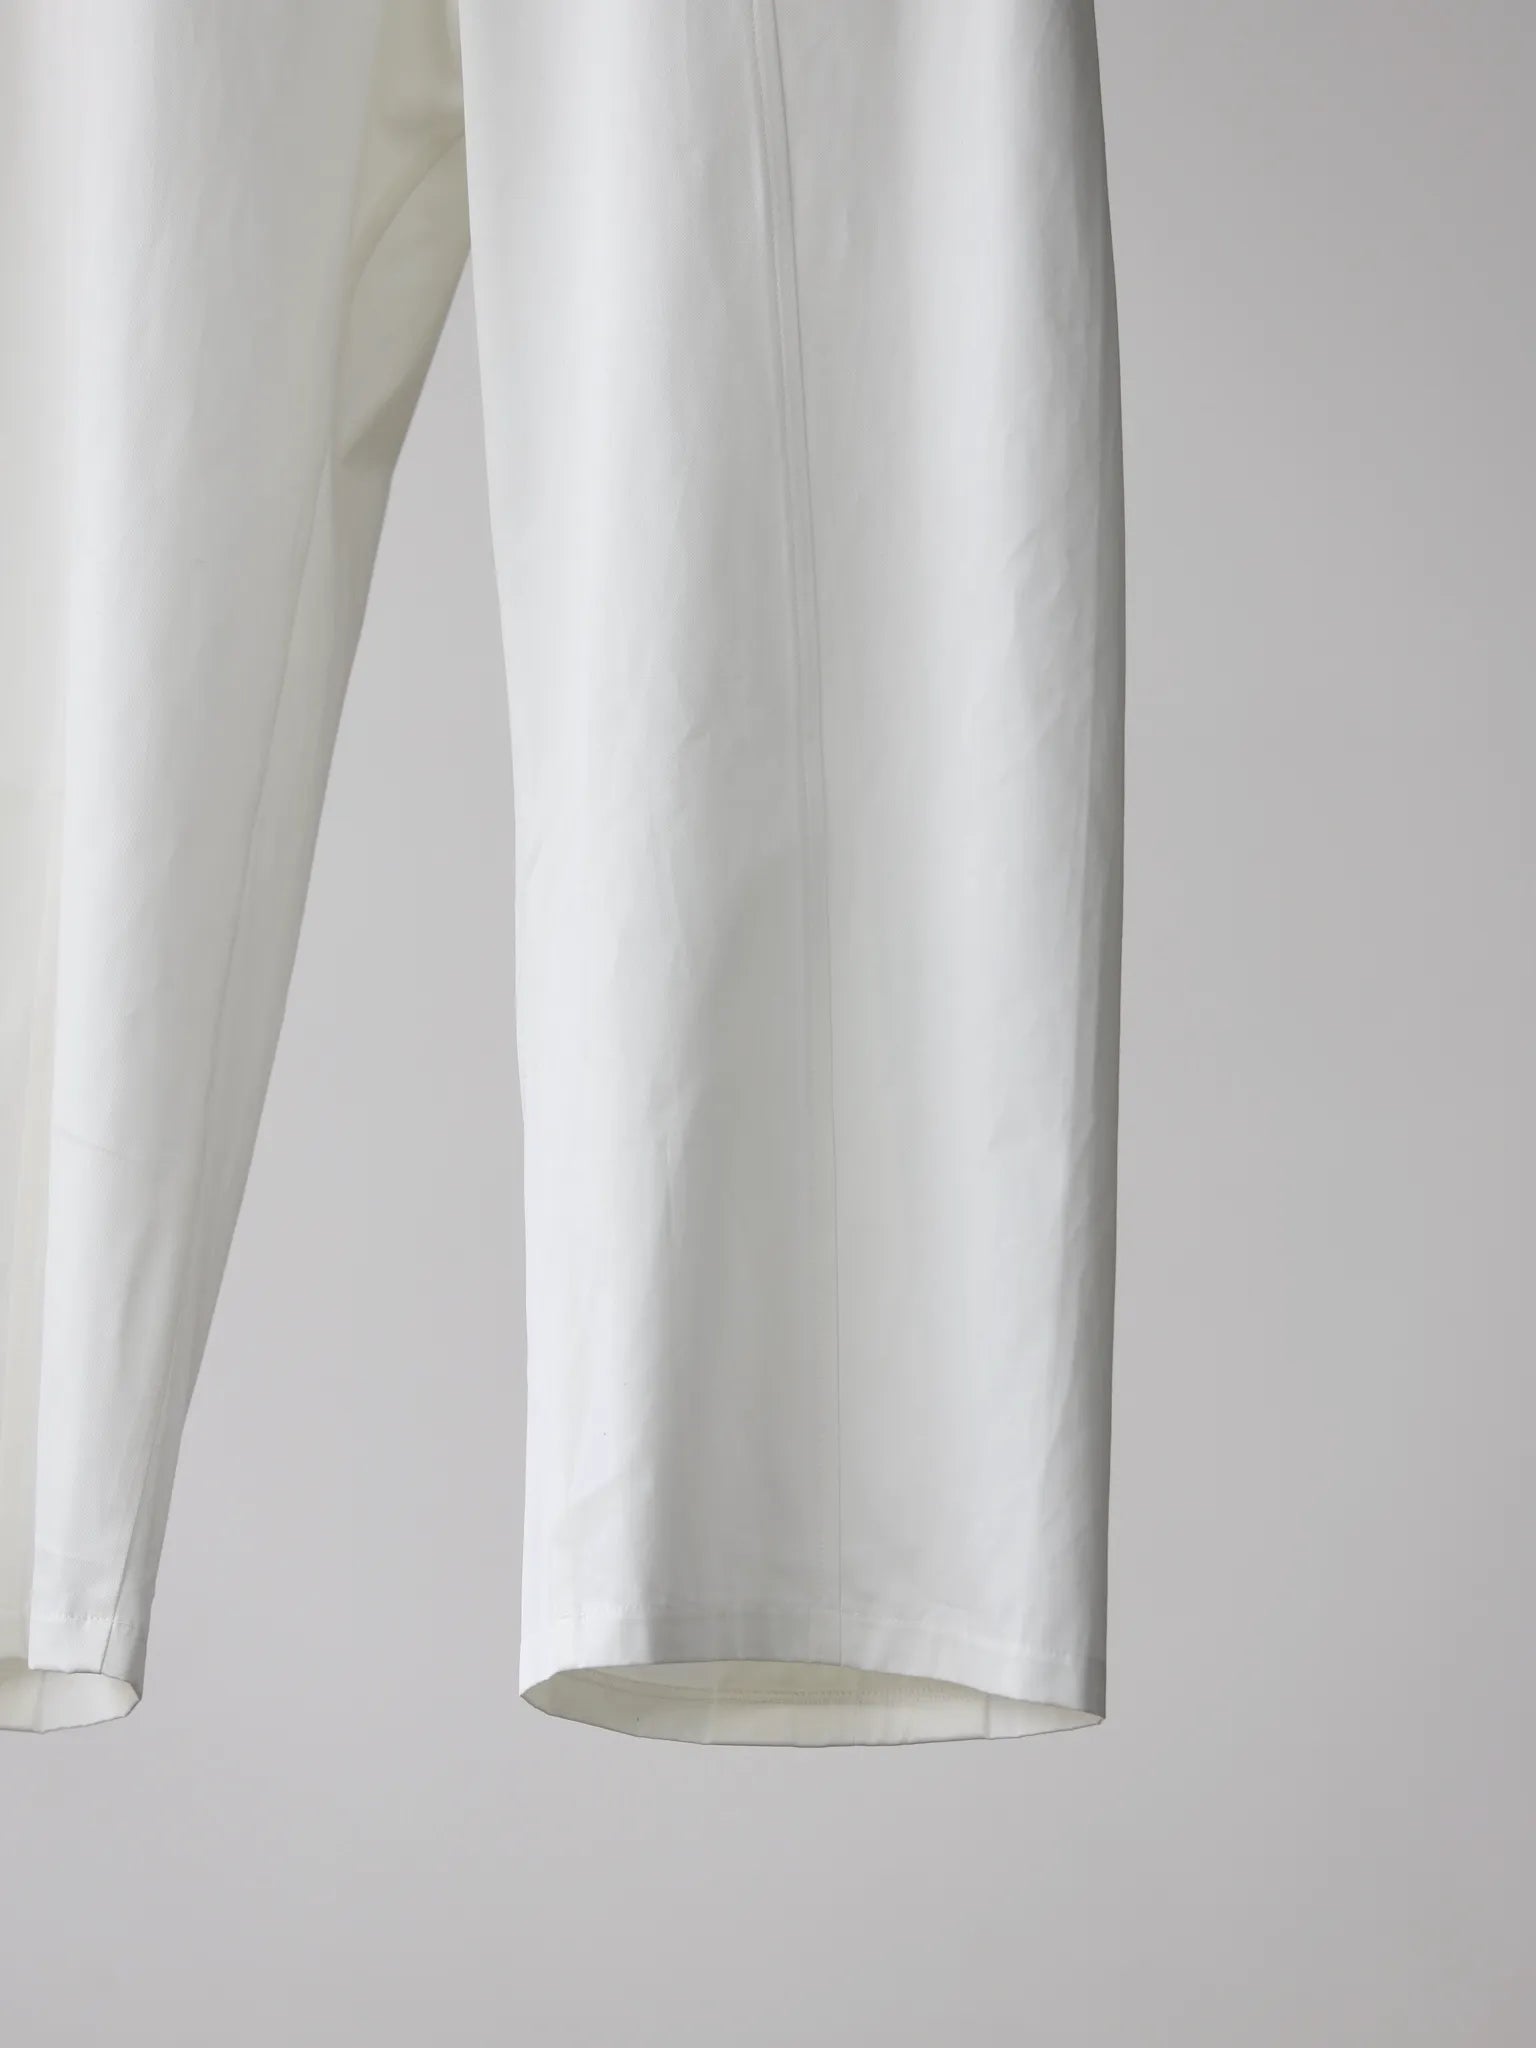 sage-nation-box-pleat-trouser-optic-white-1-3